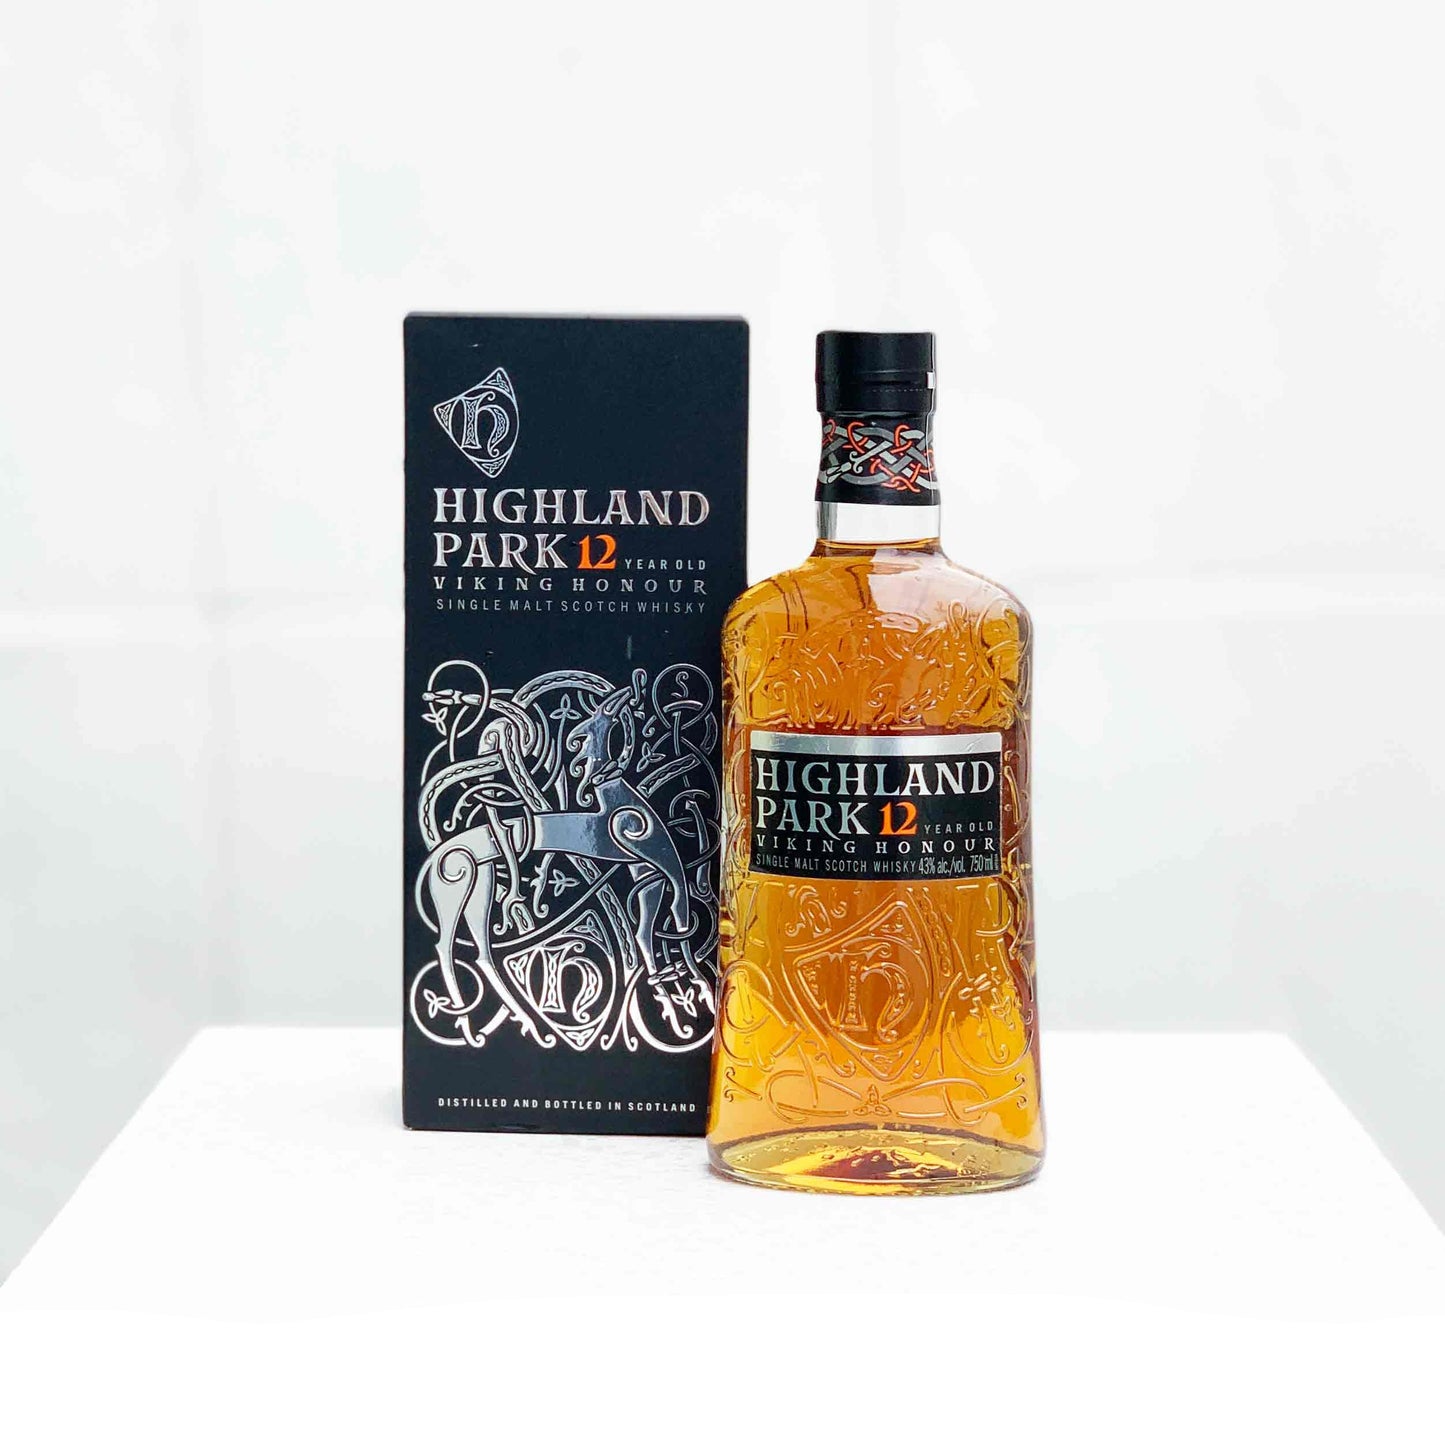 Highland Park 12 Year Old Viking Honour Scotch Whisky